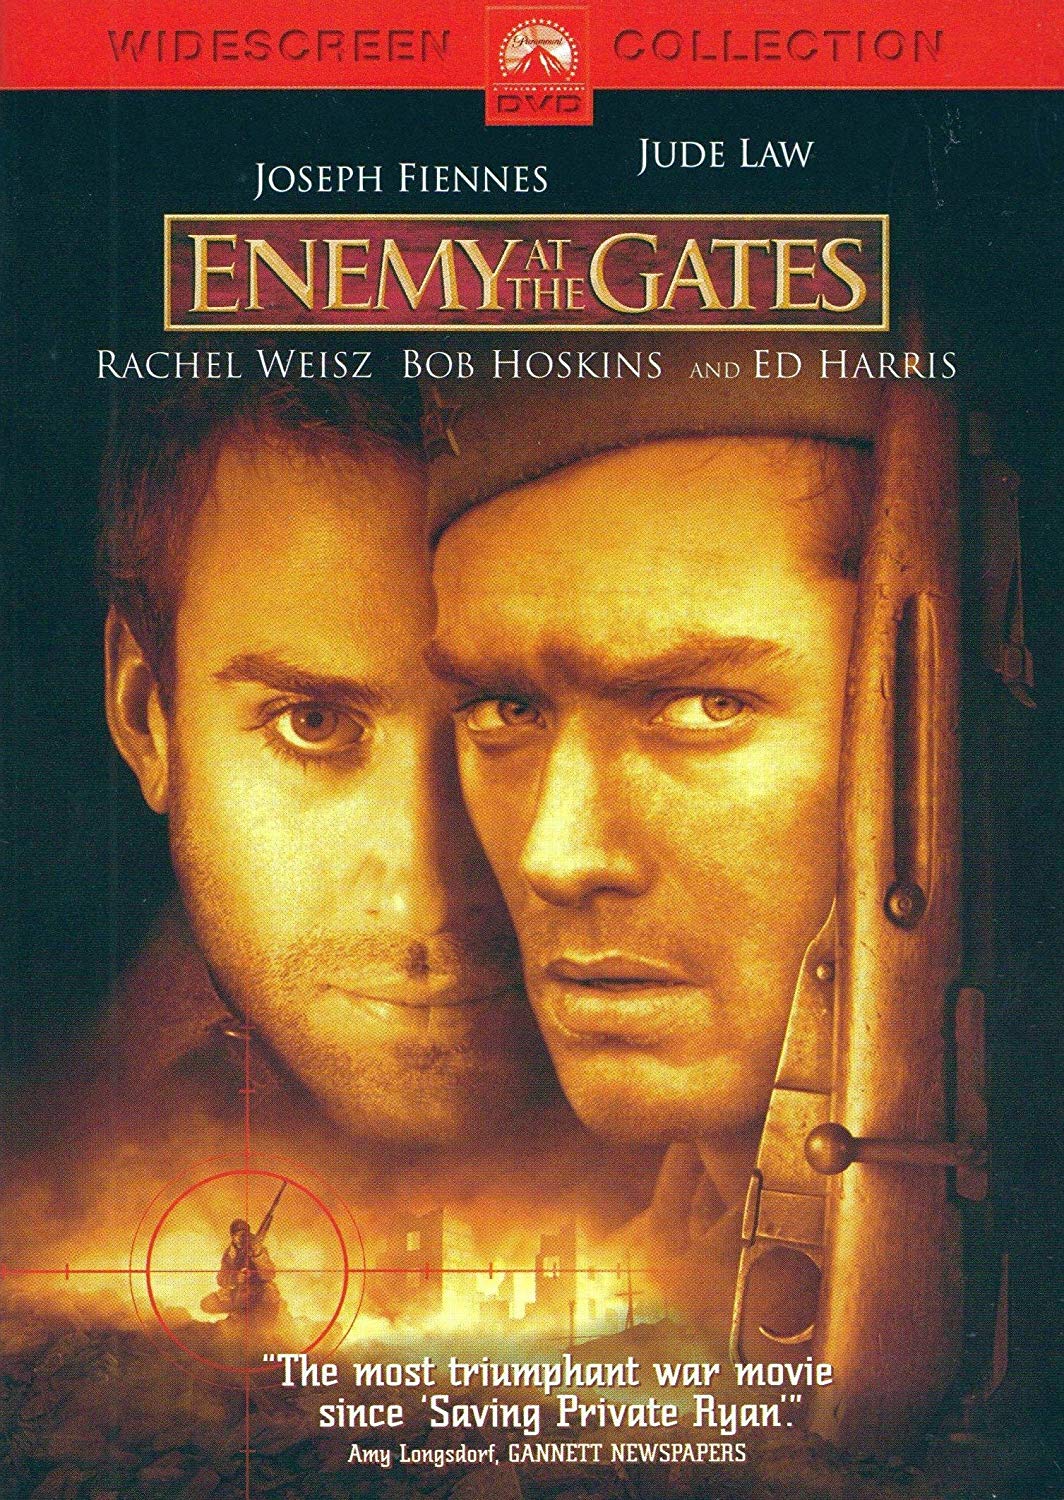 Враг у ворот: Через прицел (2001)